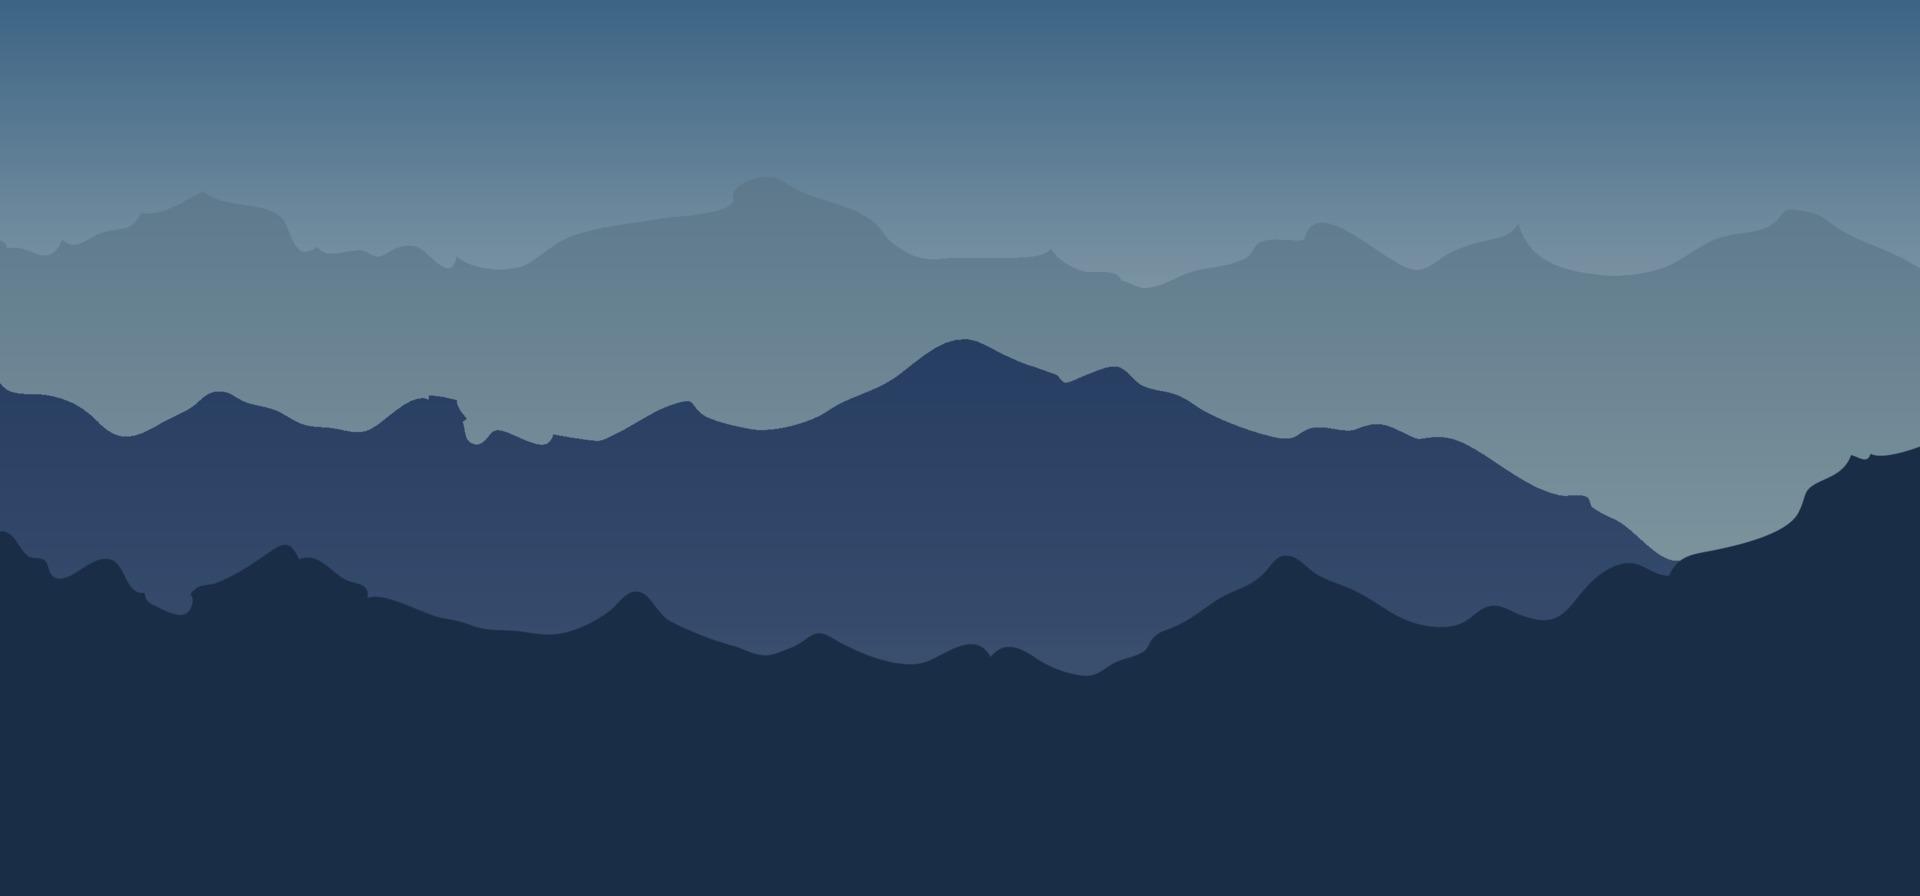 Mountain landscape view blue tone silhouette background. vector